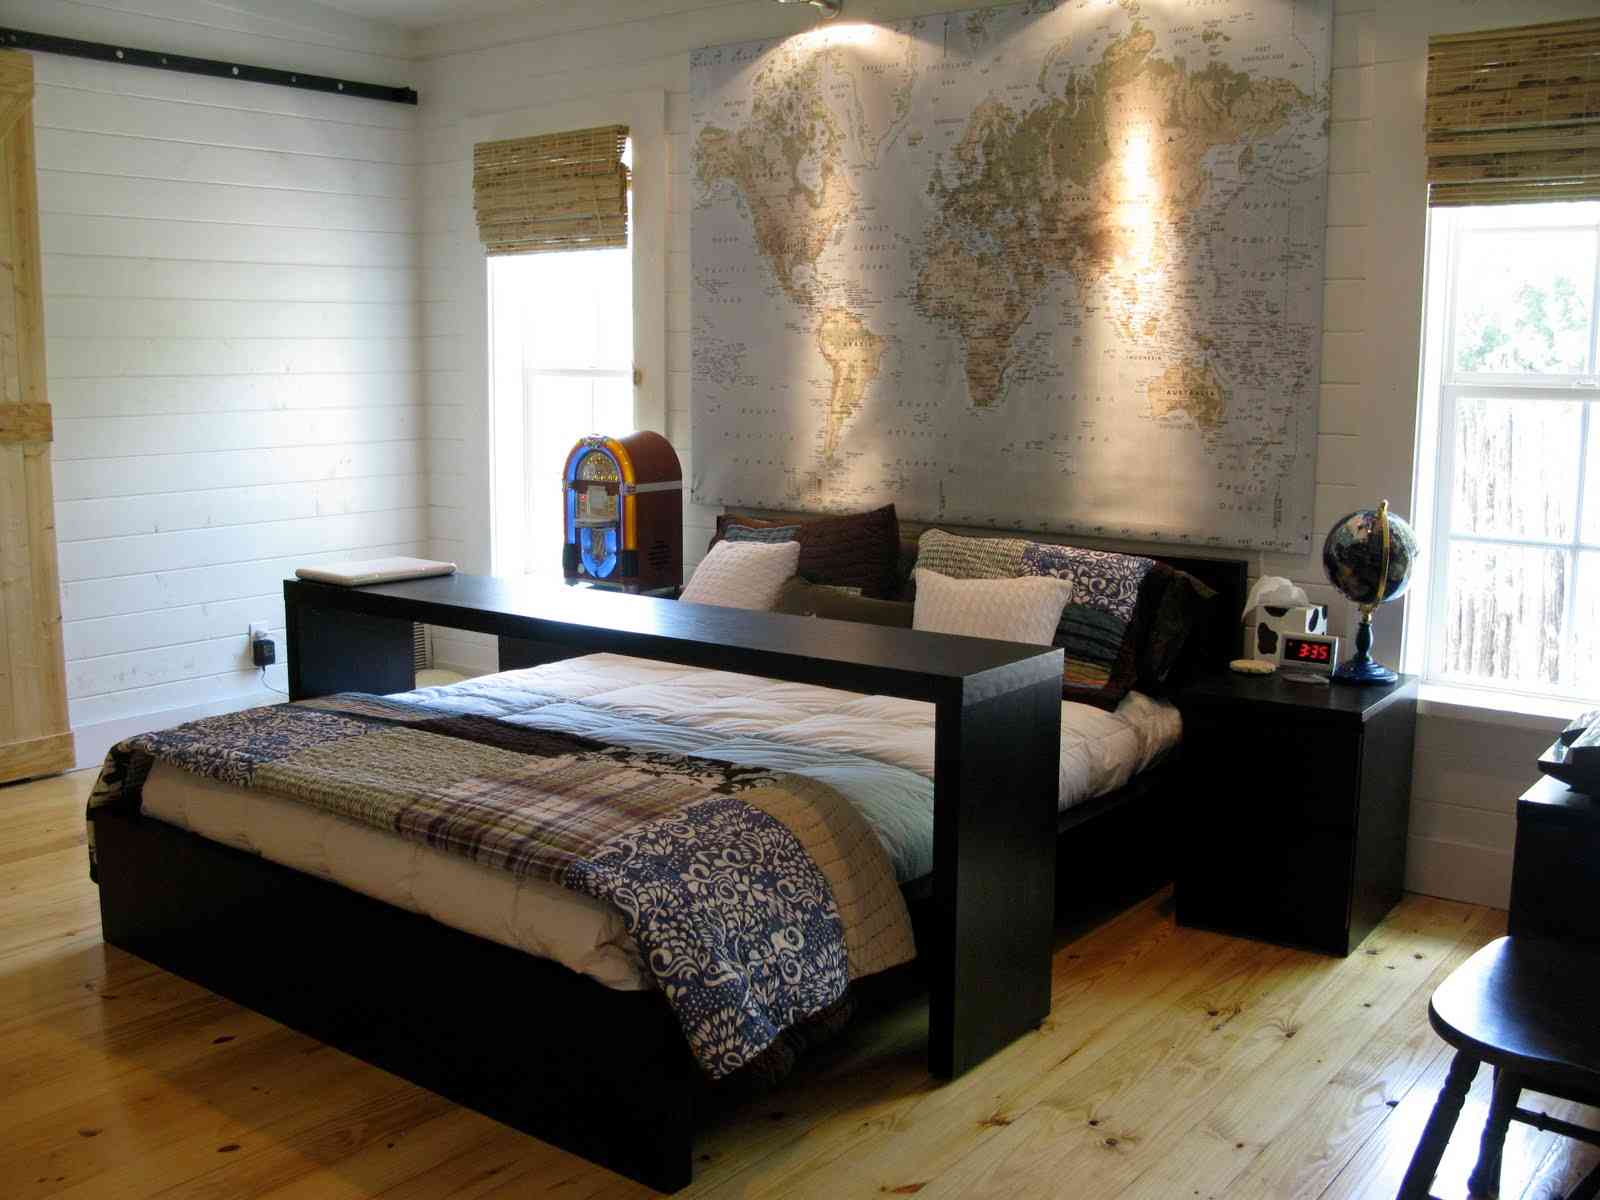 Bedroom Furniture from Ikea - new bedrooms 2015